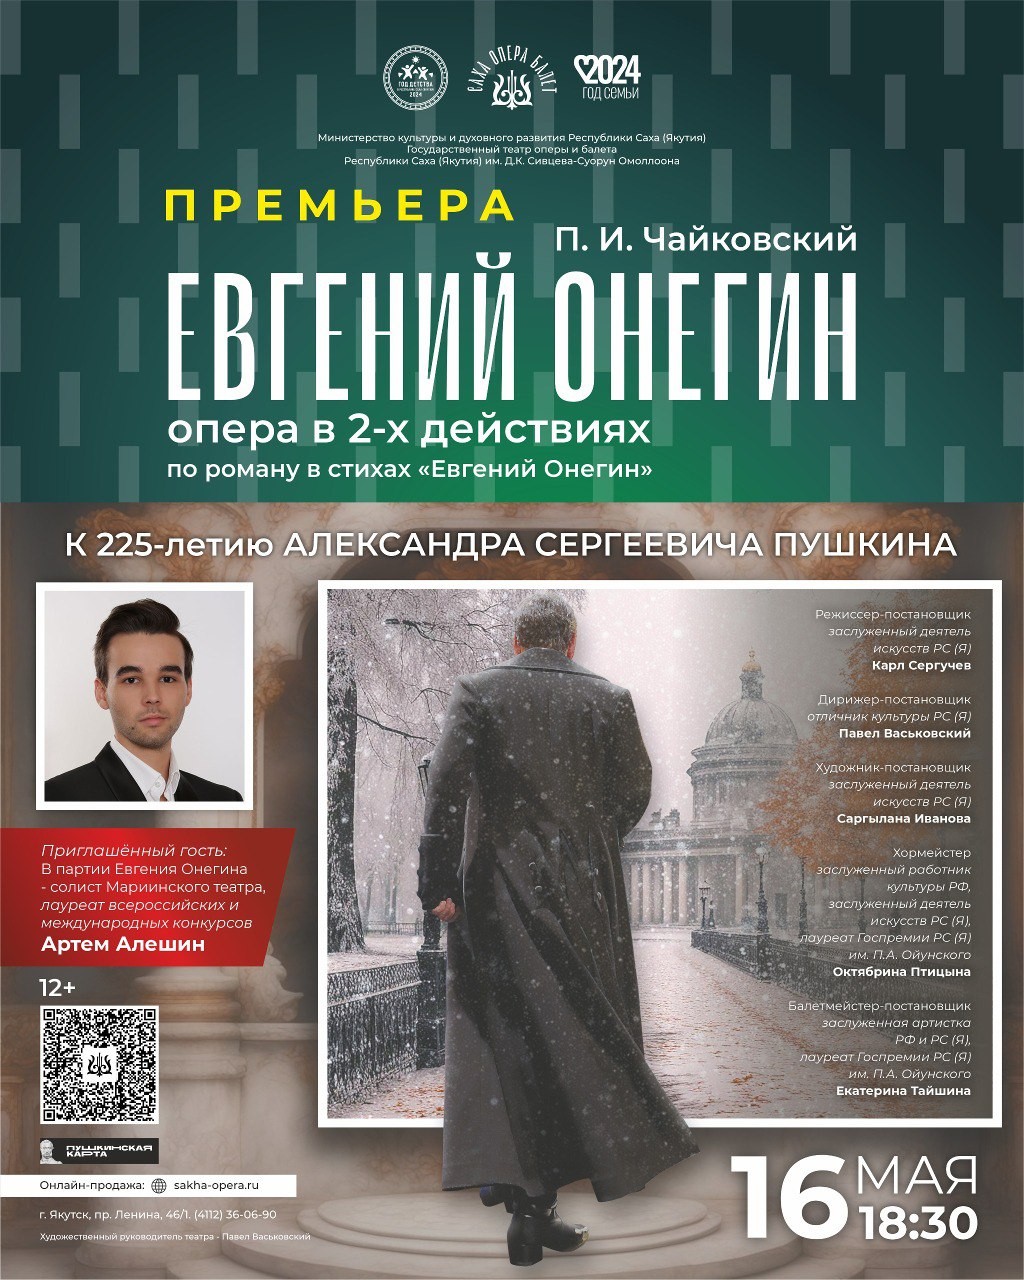 Театр оперы и балета приглашает на премьеру оперы «Евгений Онегин»